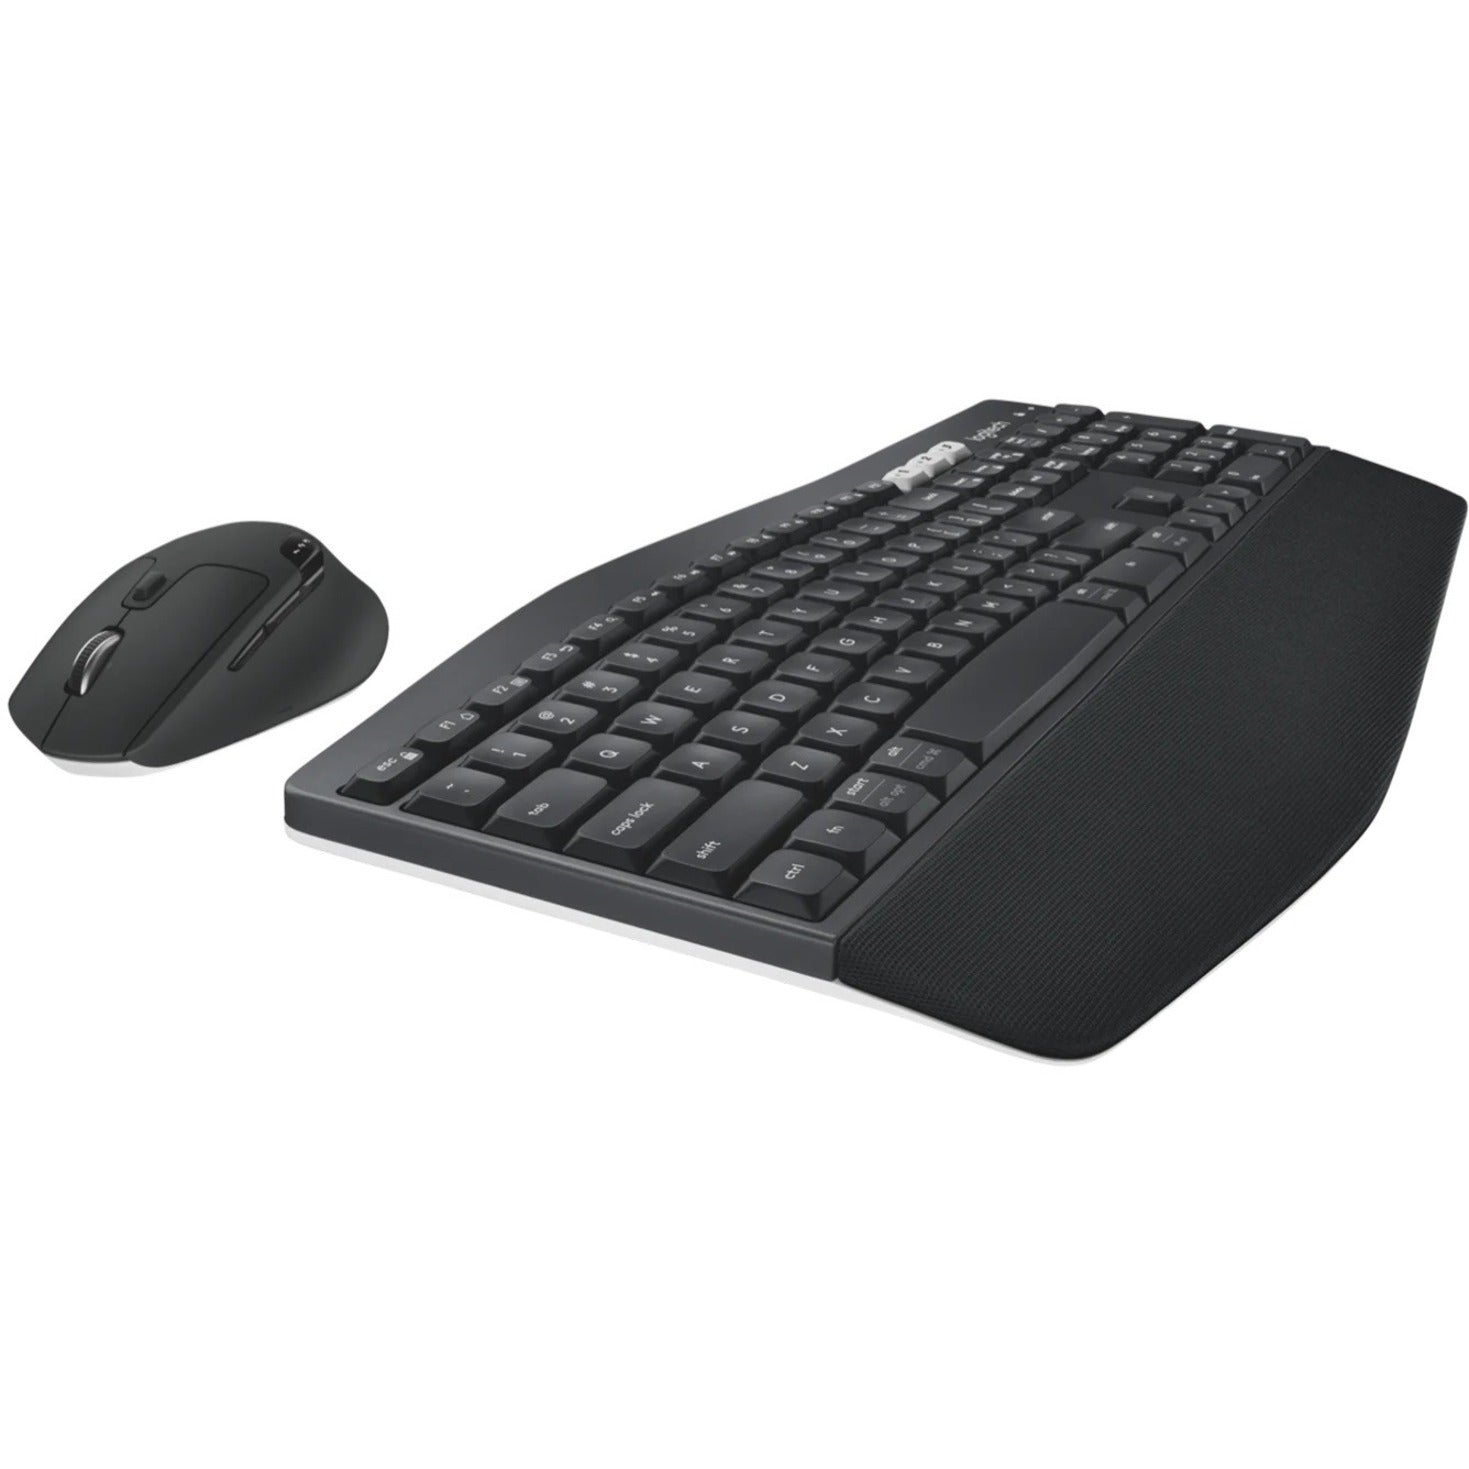 Logitech 920-008219 MK850 Performance Wireless Keyboard and Mouse Combo, Bluetooth/RF, USB, 1 Year Warranty